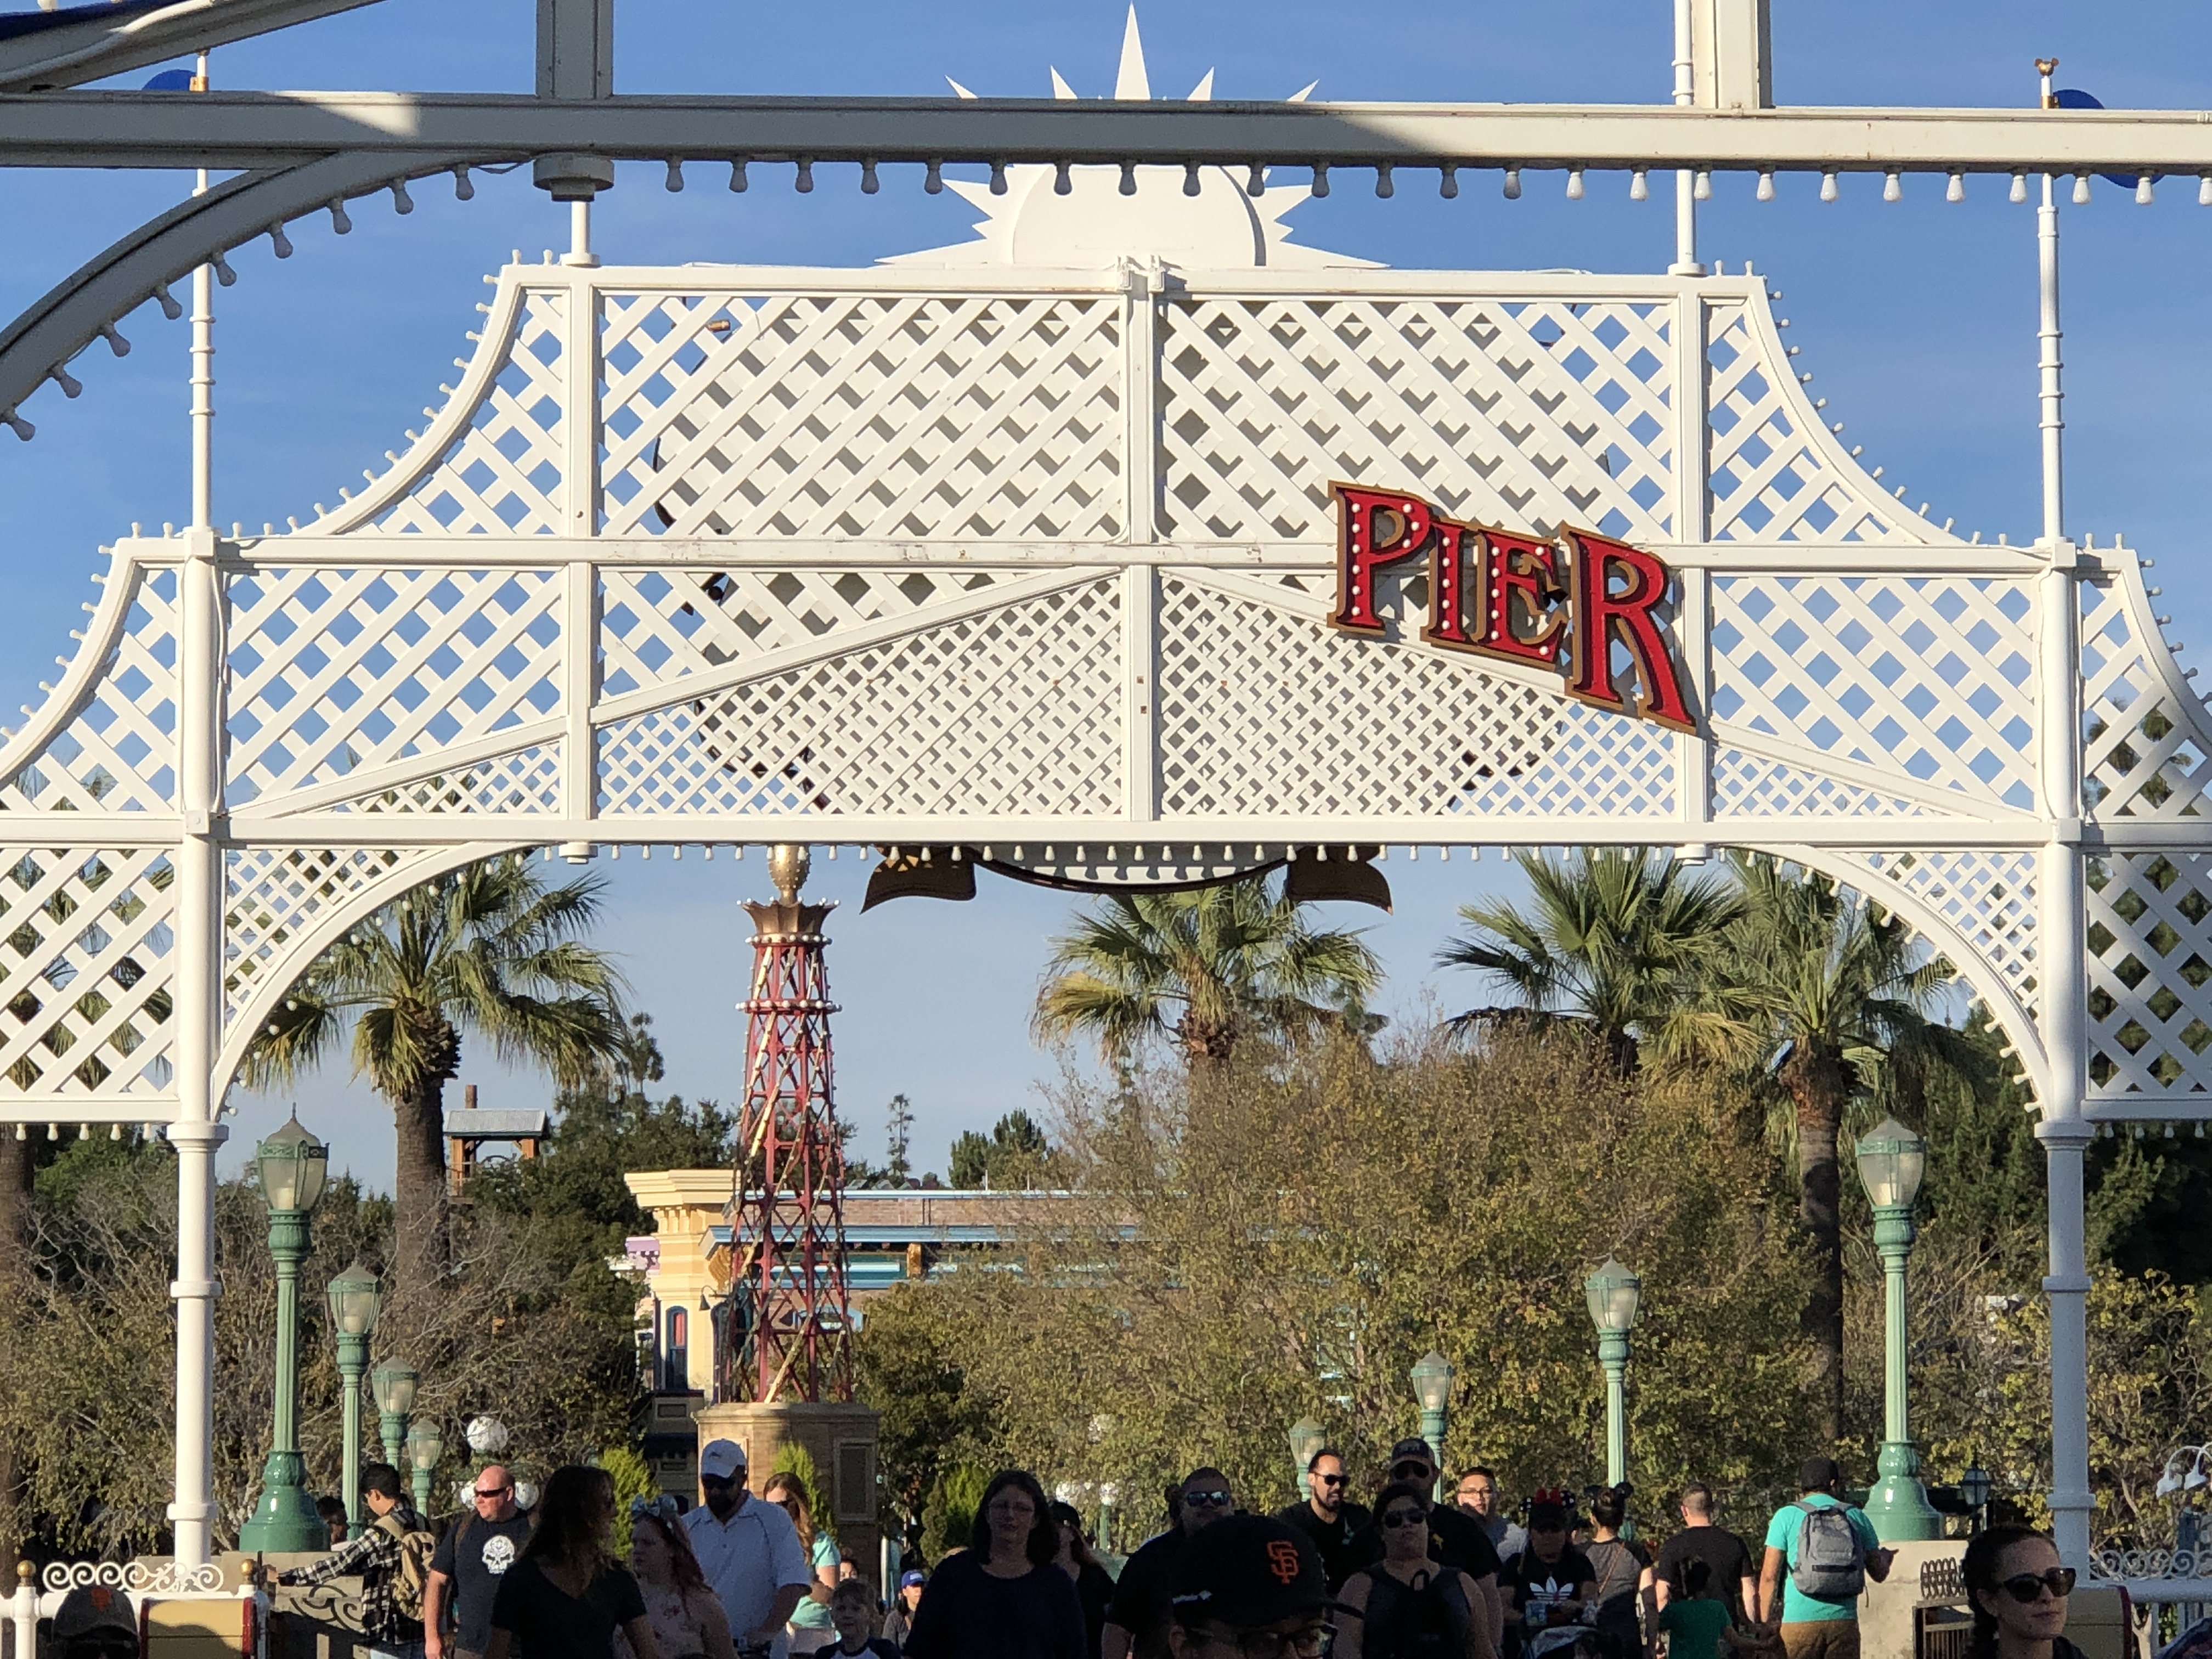 Disneyland Update 1/15/17 Featuring Main Street & Paradise Pier Refurbishments